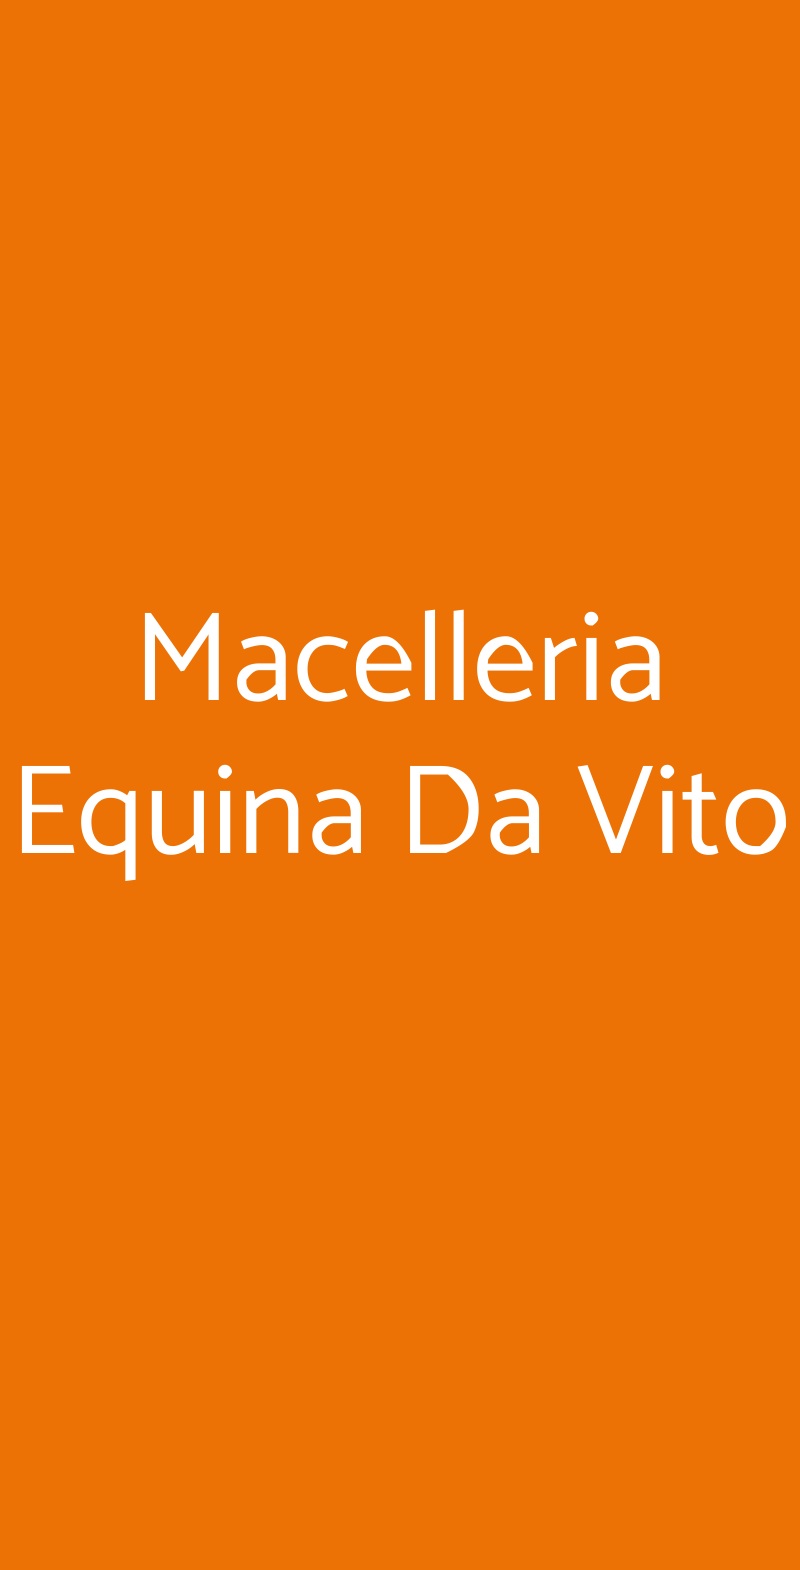 Macelleria Equina Da Vito Milano menù 1 pagina